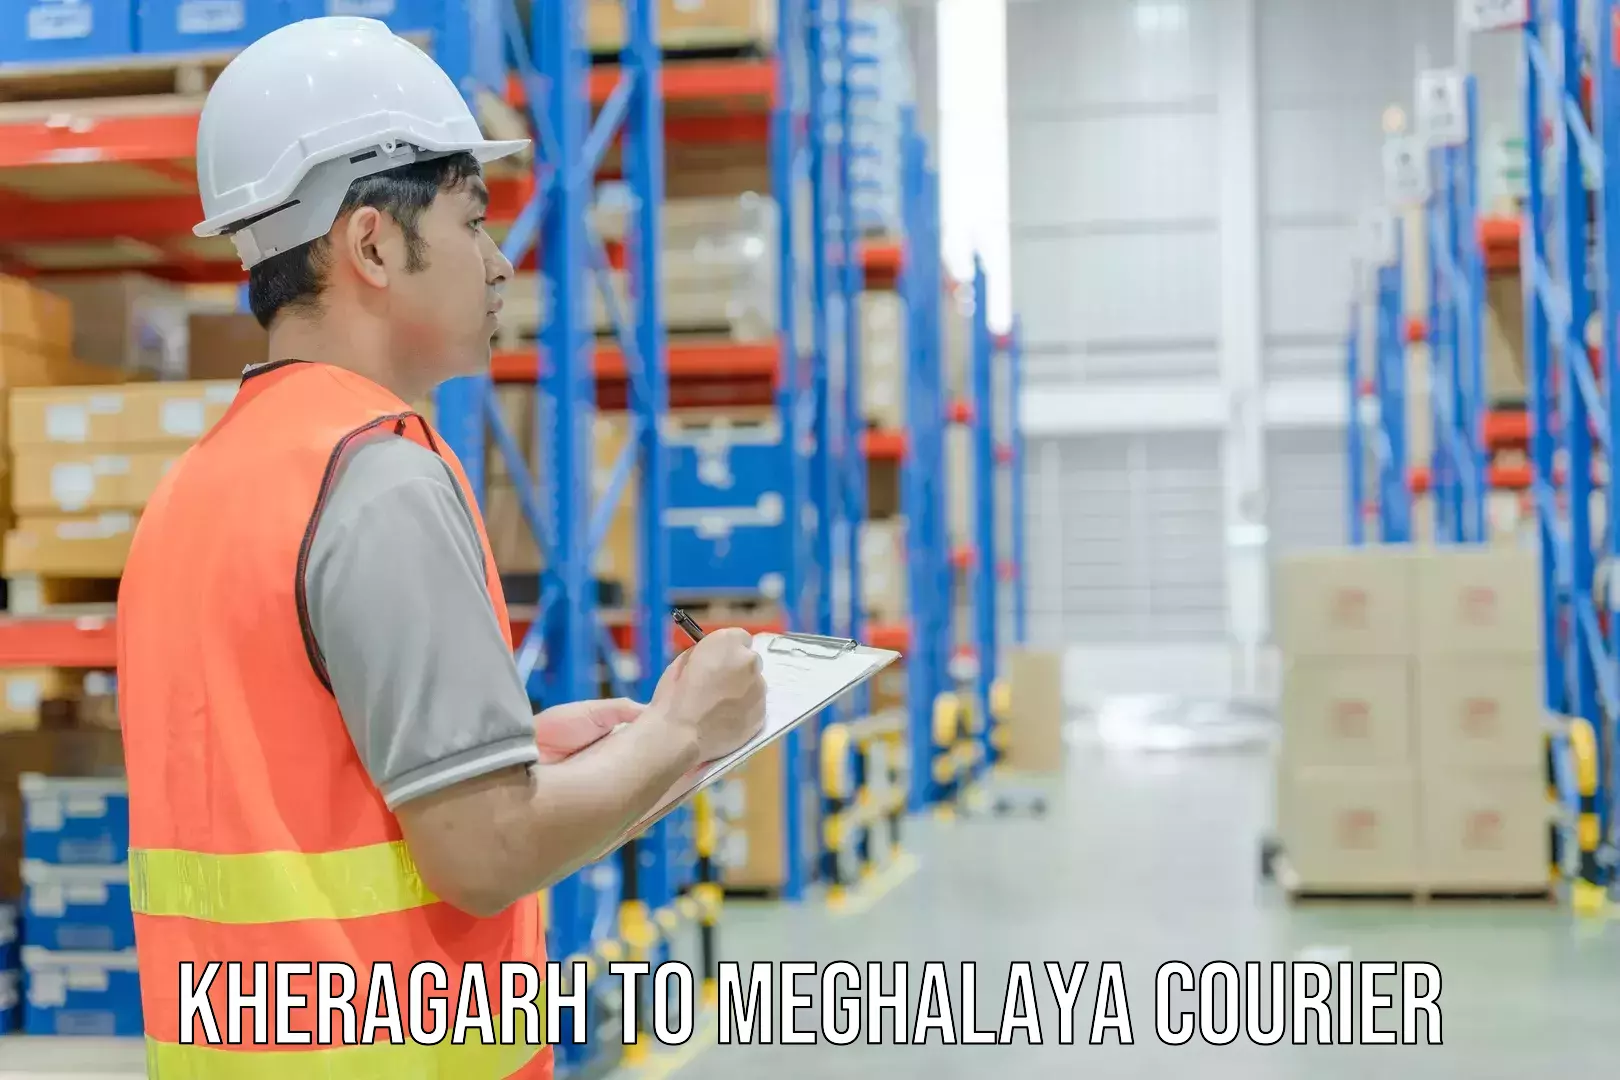 Courier service efficiency Kheragarh to Meghalaya